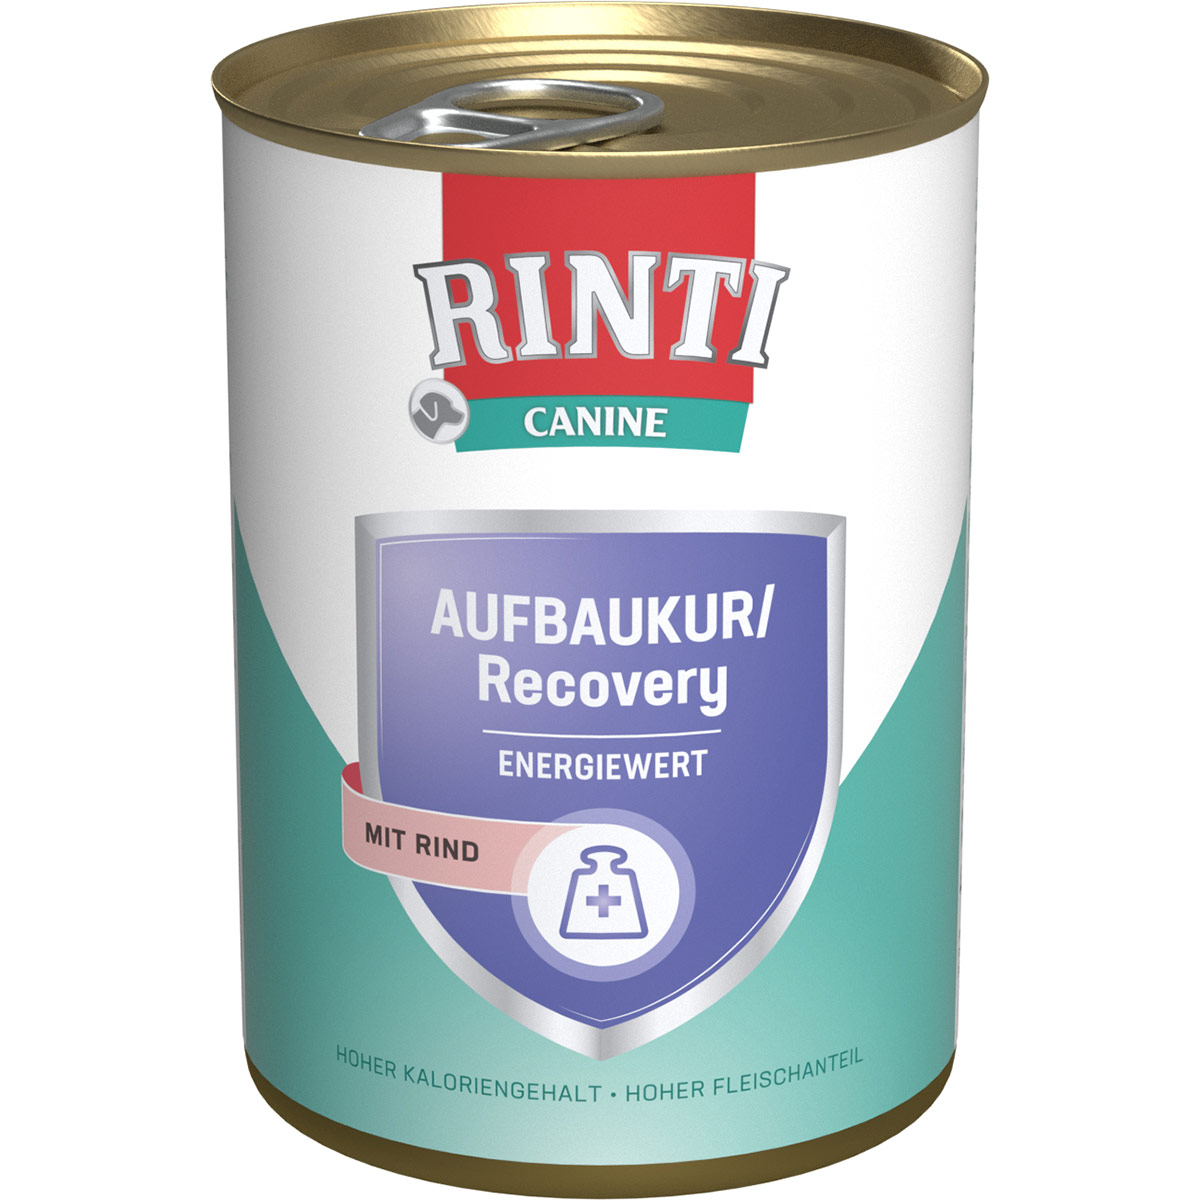 RINTI Canine Aufbaukur/Recovery Rind